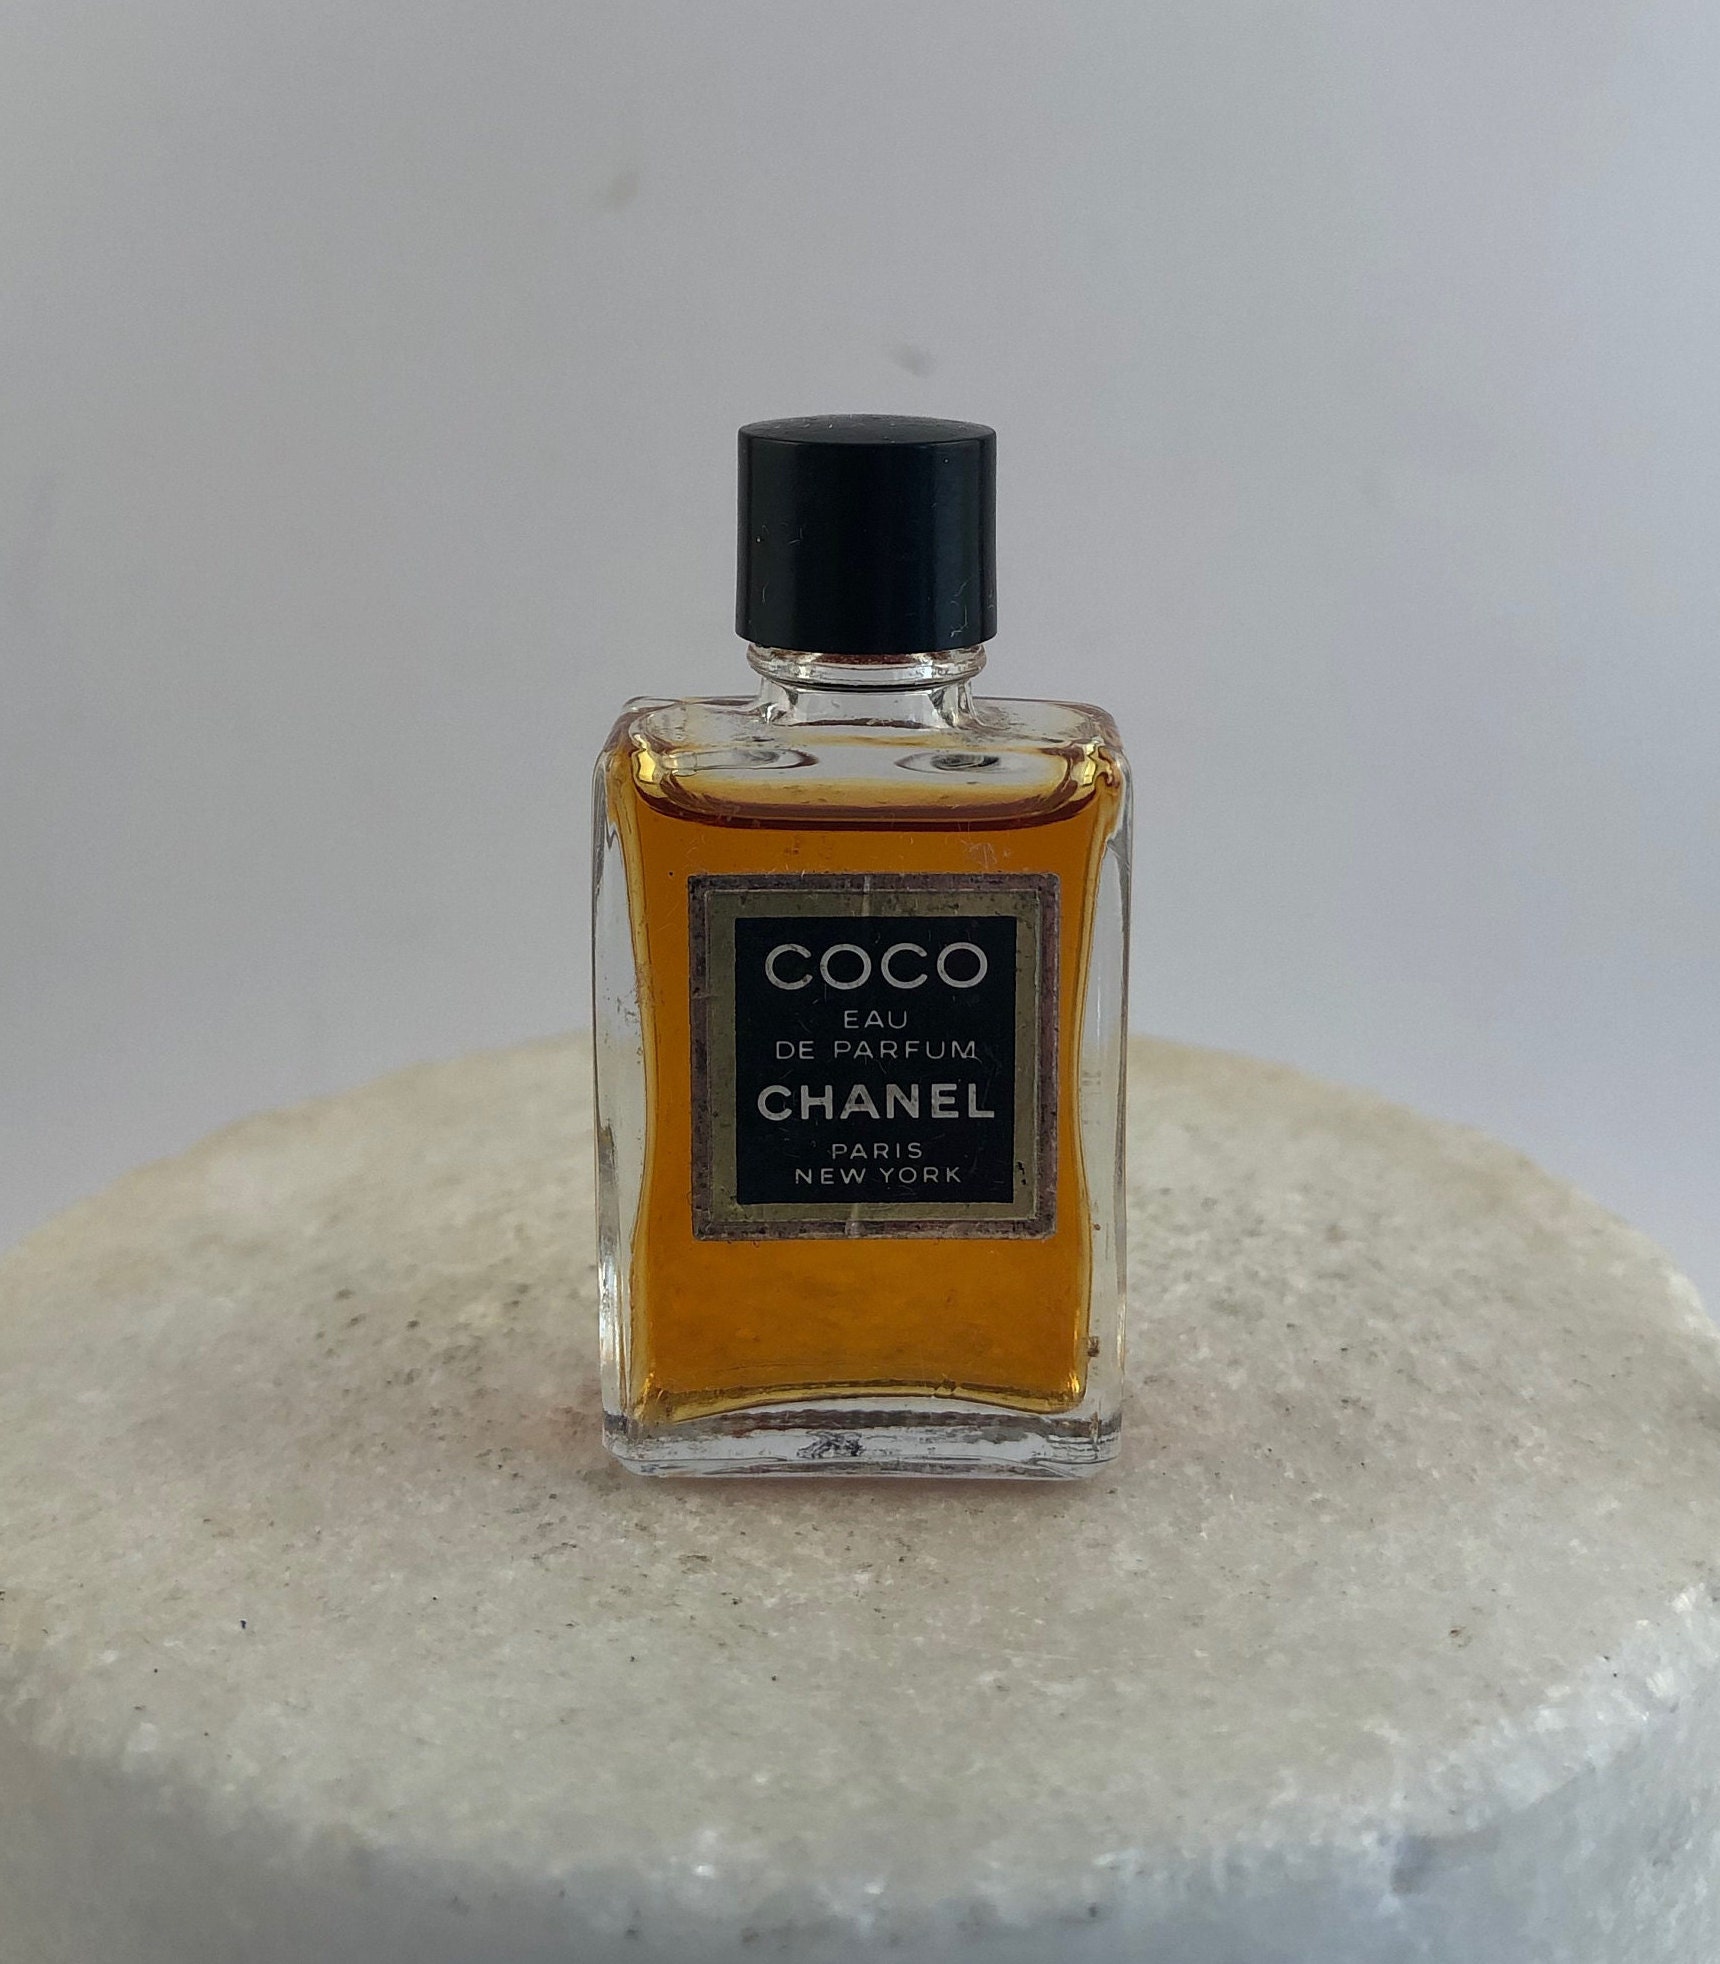 Shop for samples of Coco (Eau de Parfum) by Chanel for women